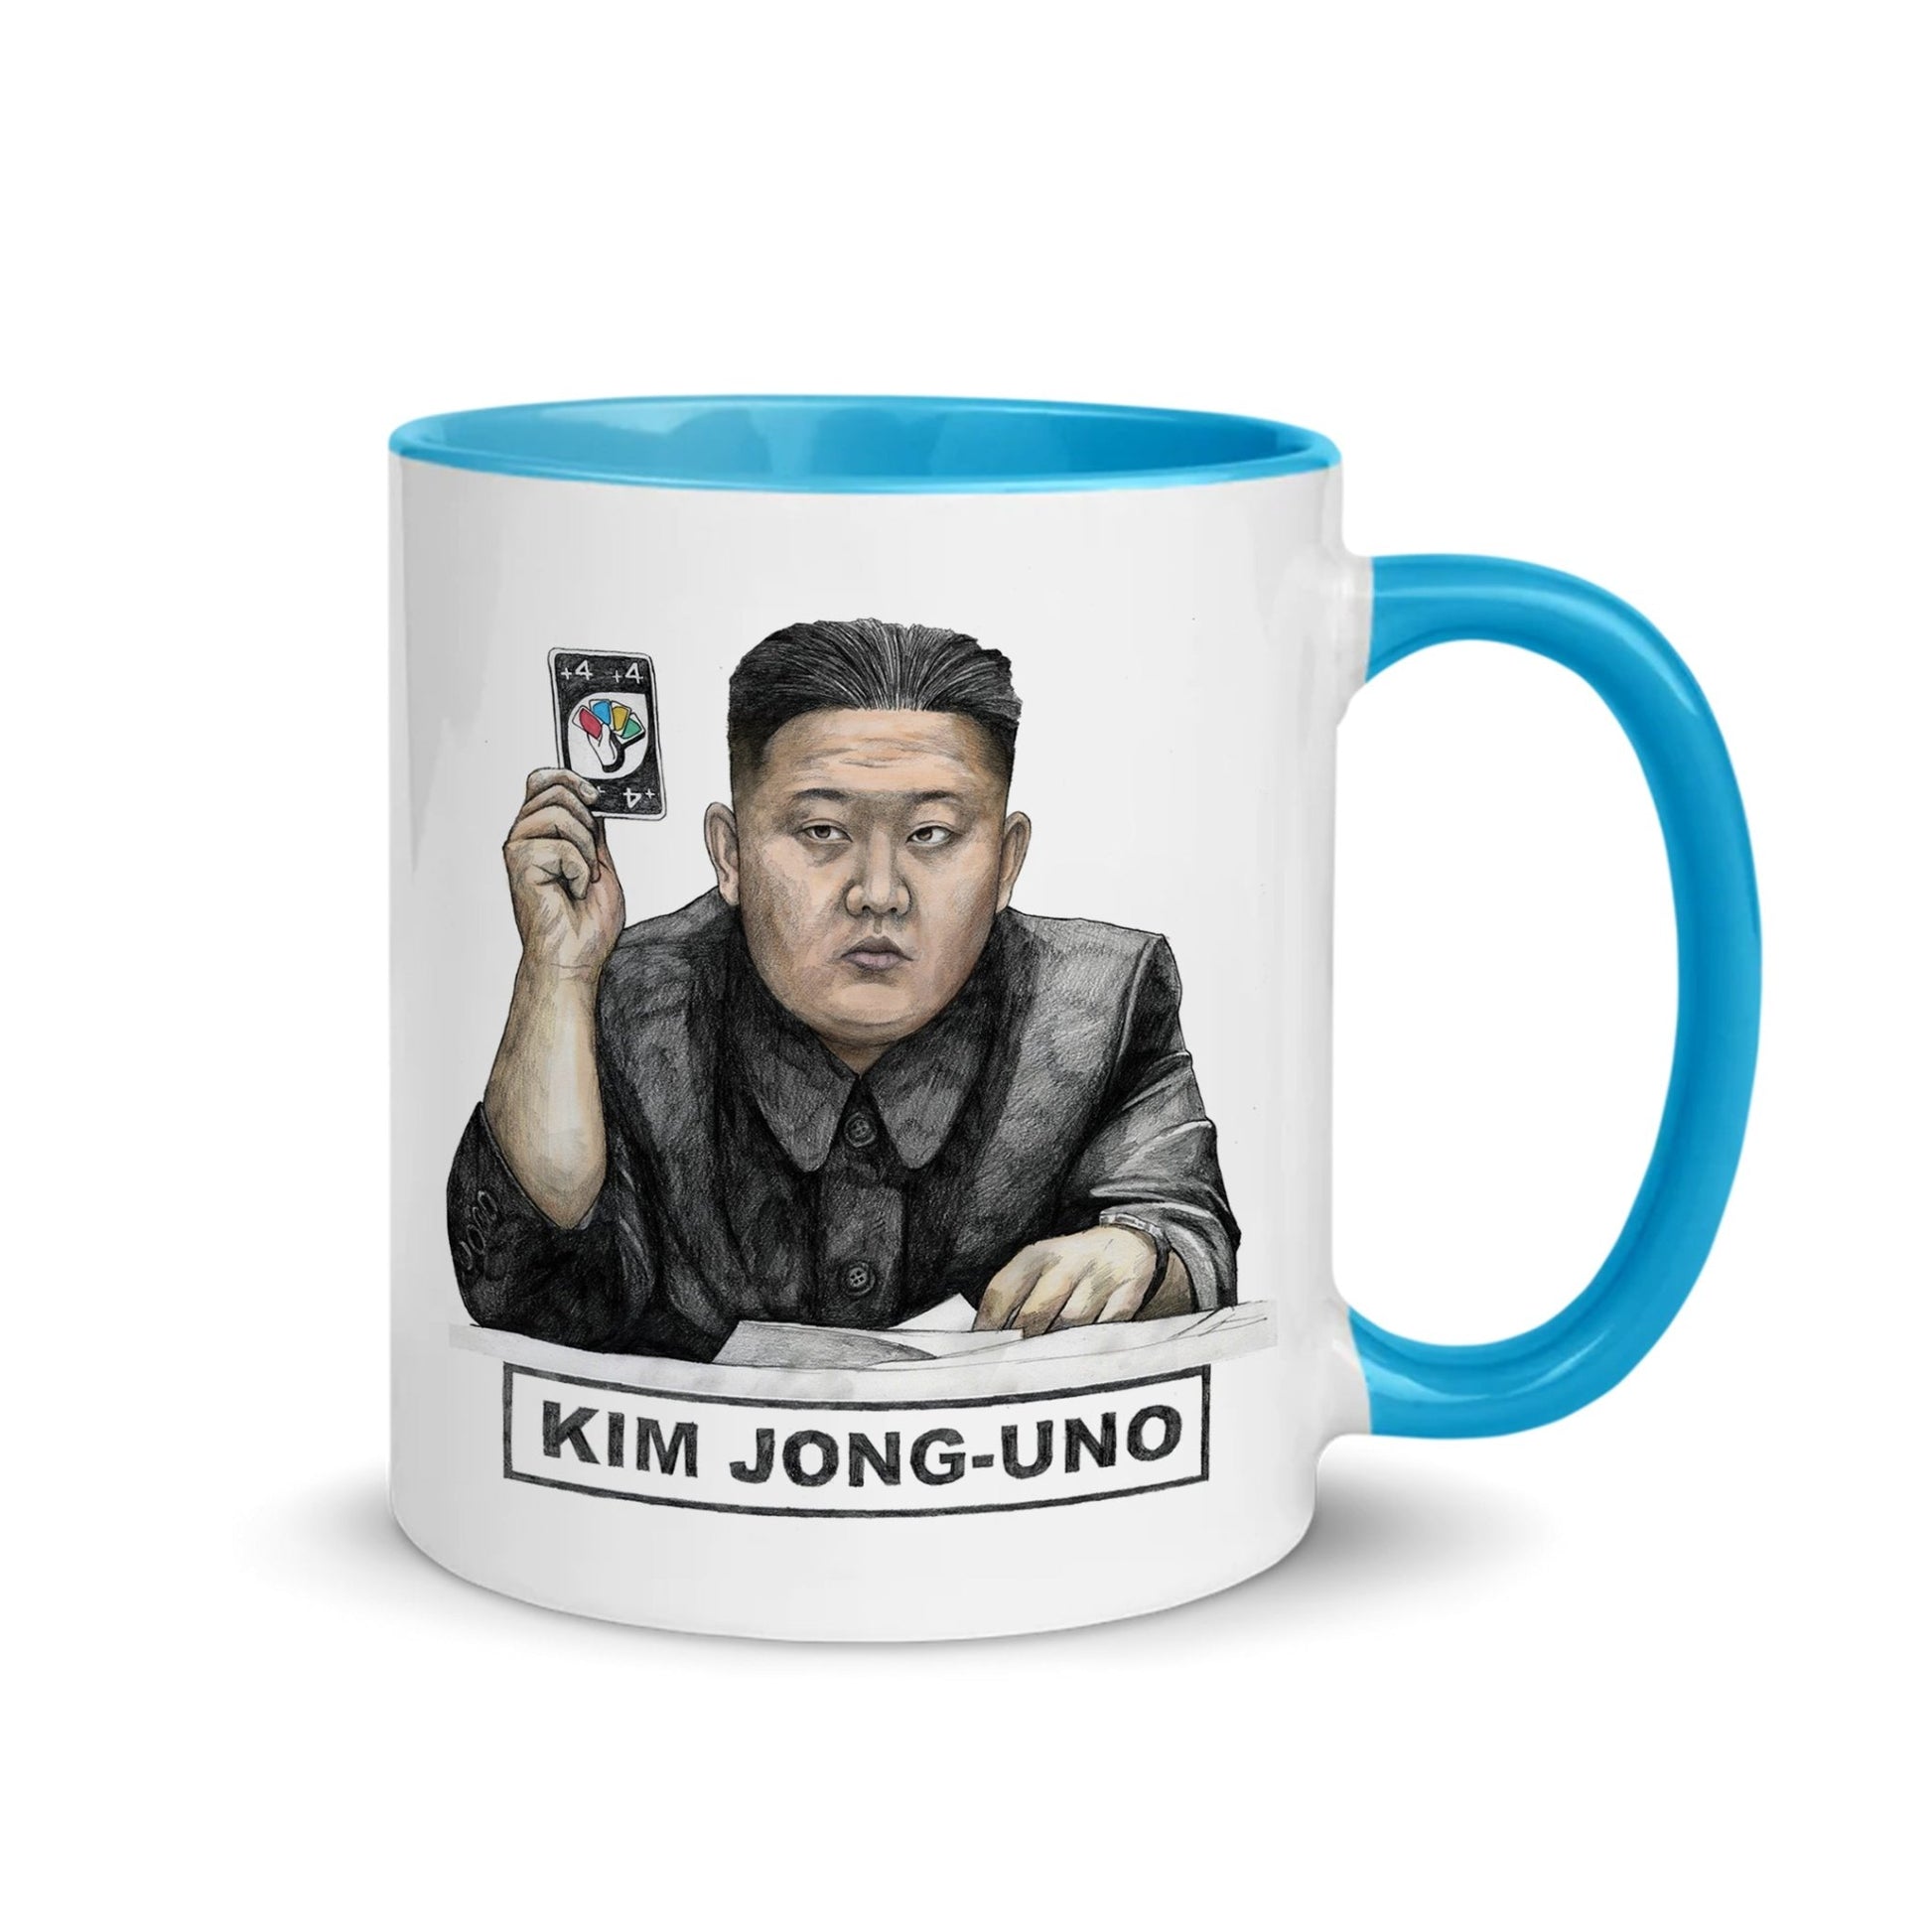 Kim Jong-Uno Ceramic Mug - Quite Good Cards Funny Birthday Card